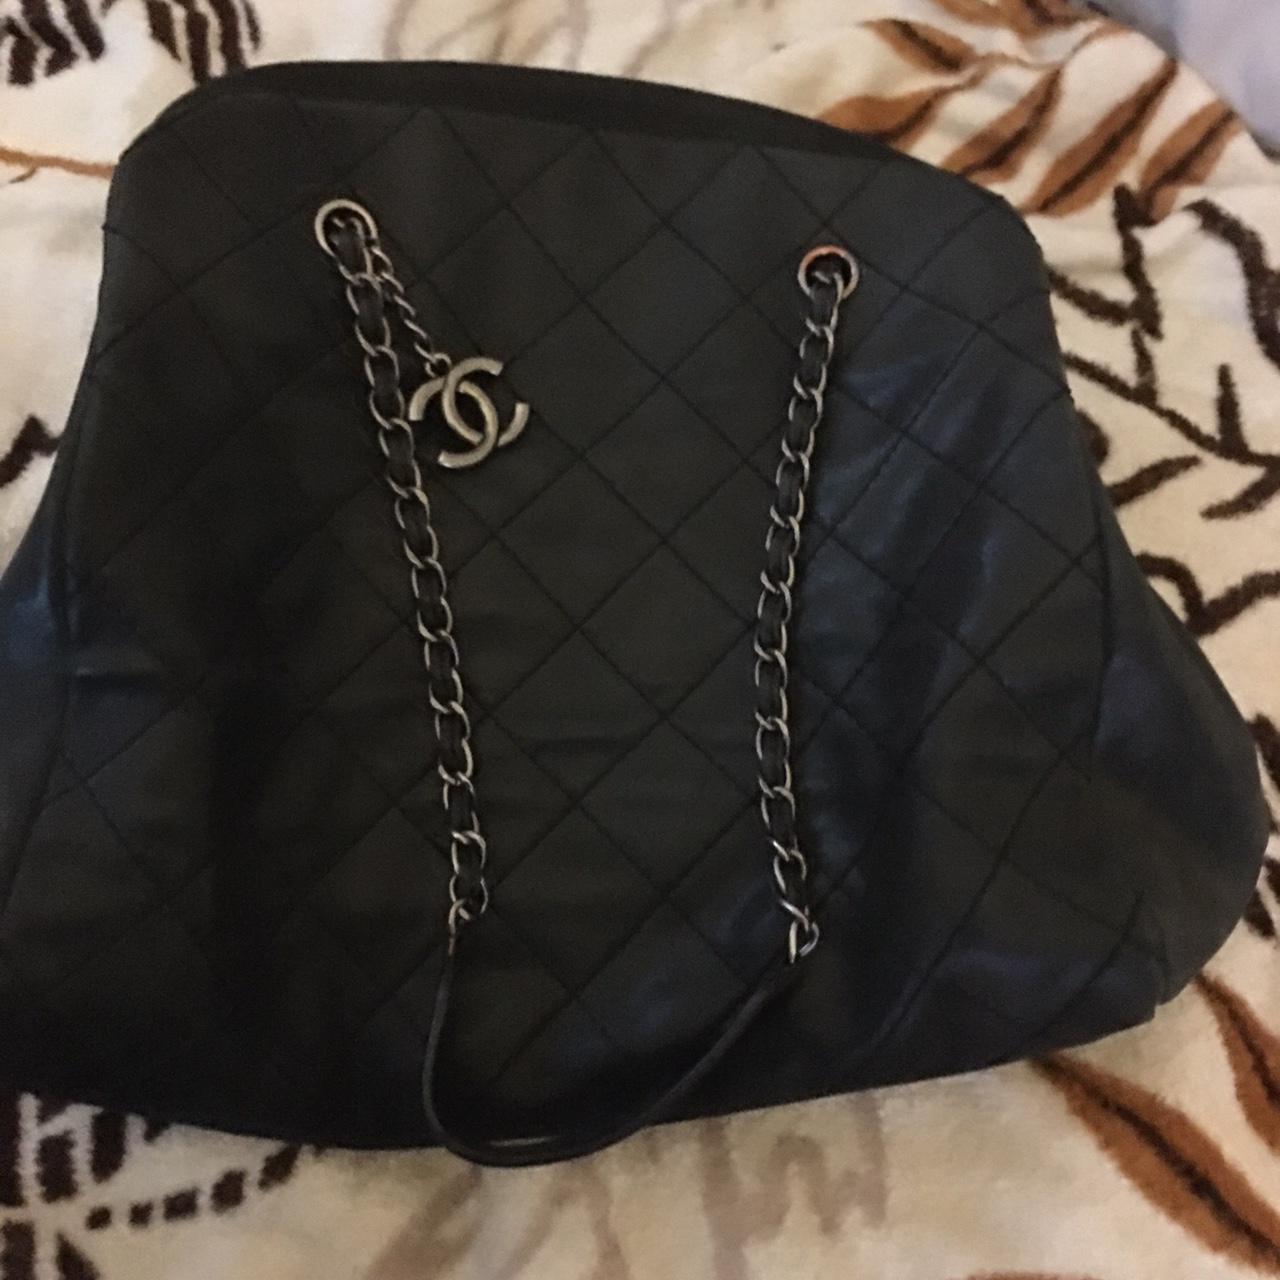 Chanel purse up for sale - Depop